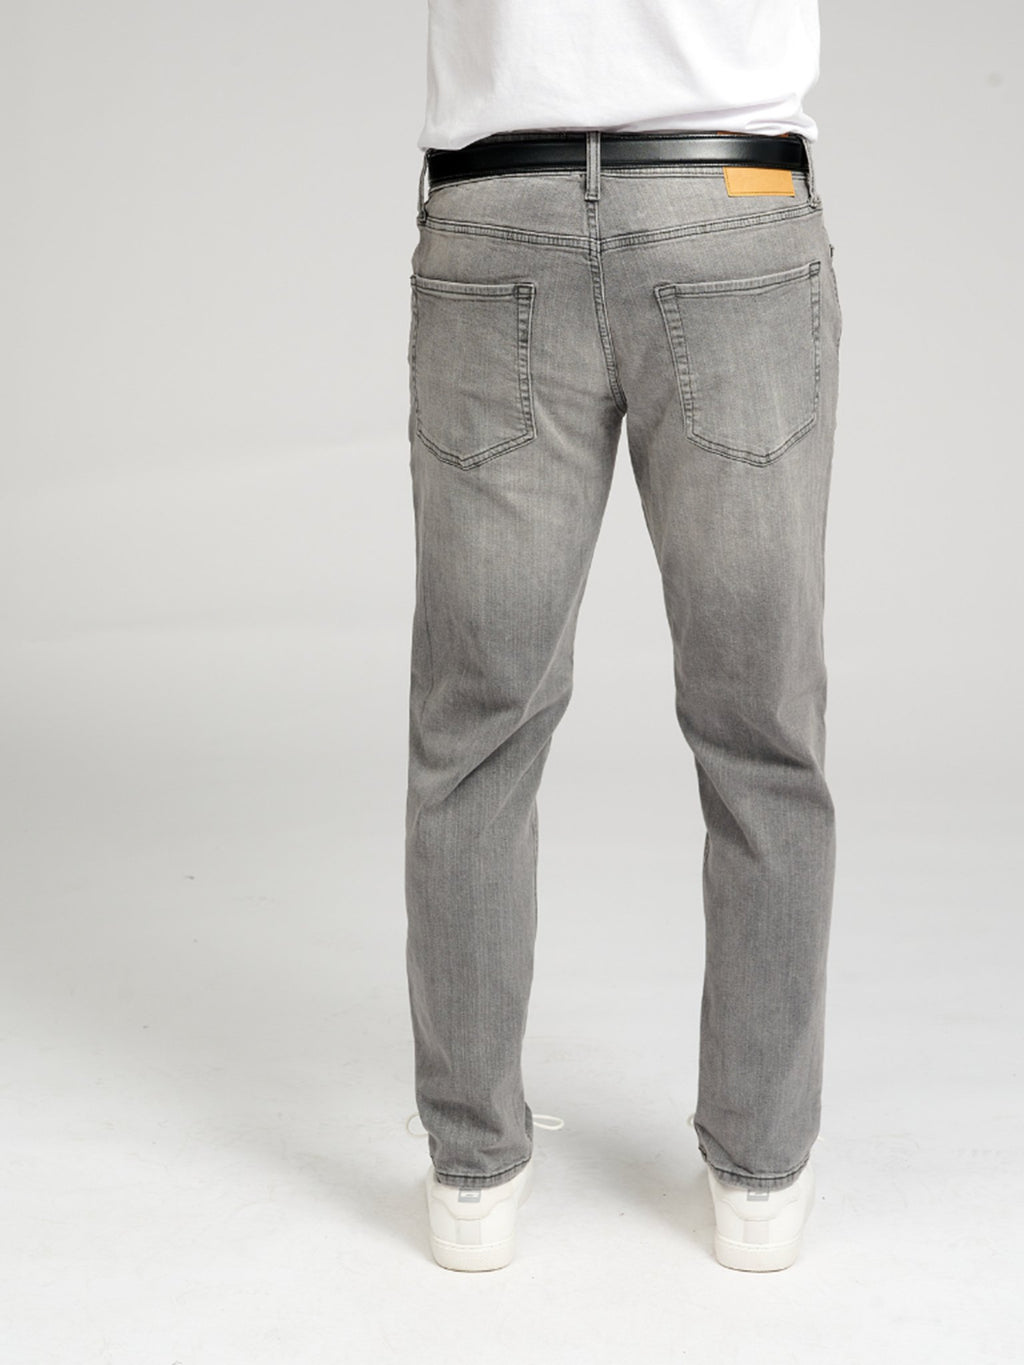 The Original Performance Jeans (rialta) - denim liath